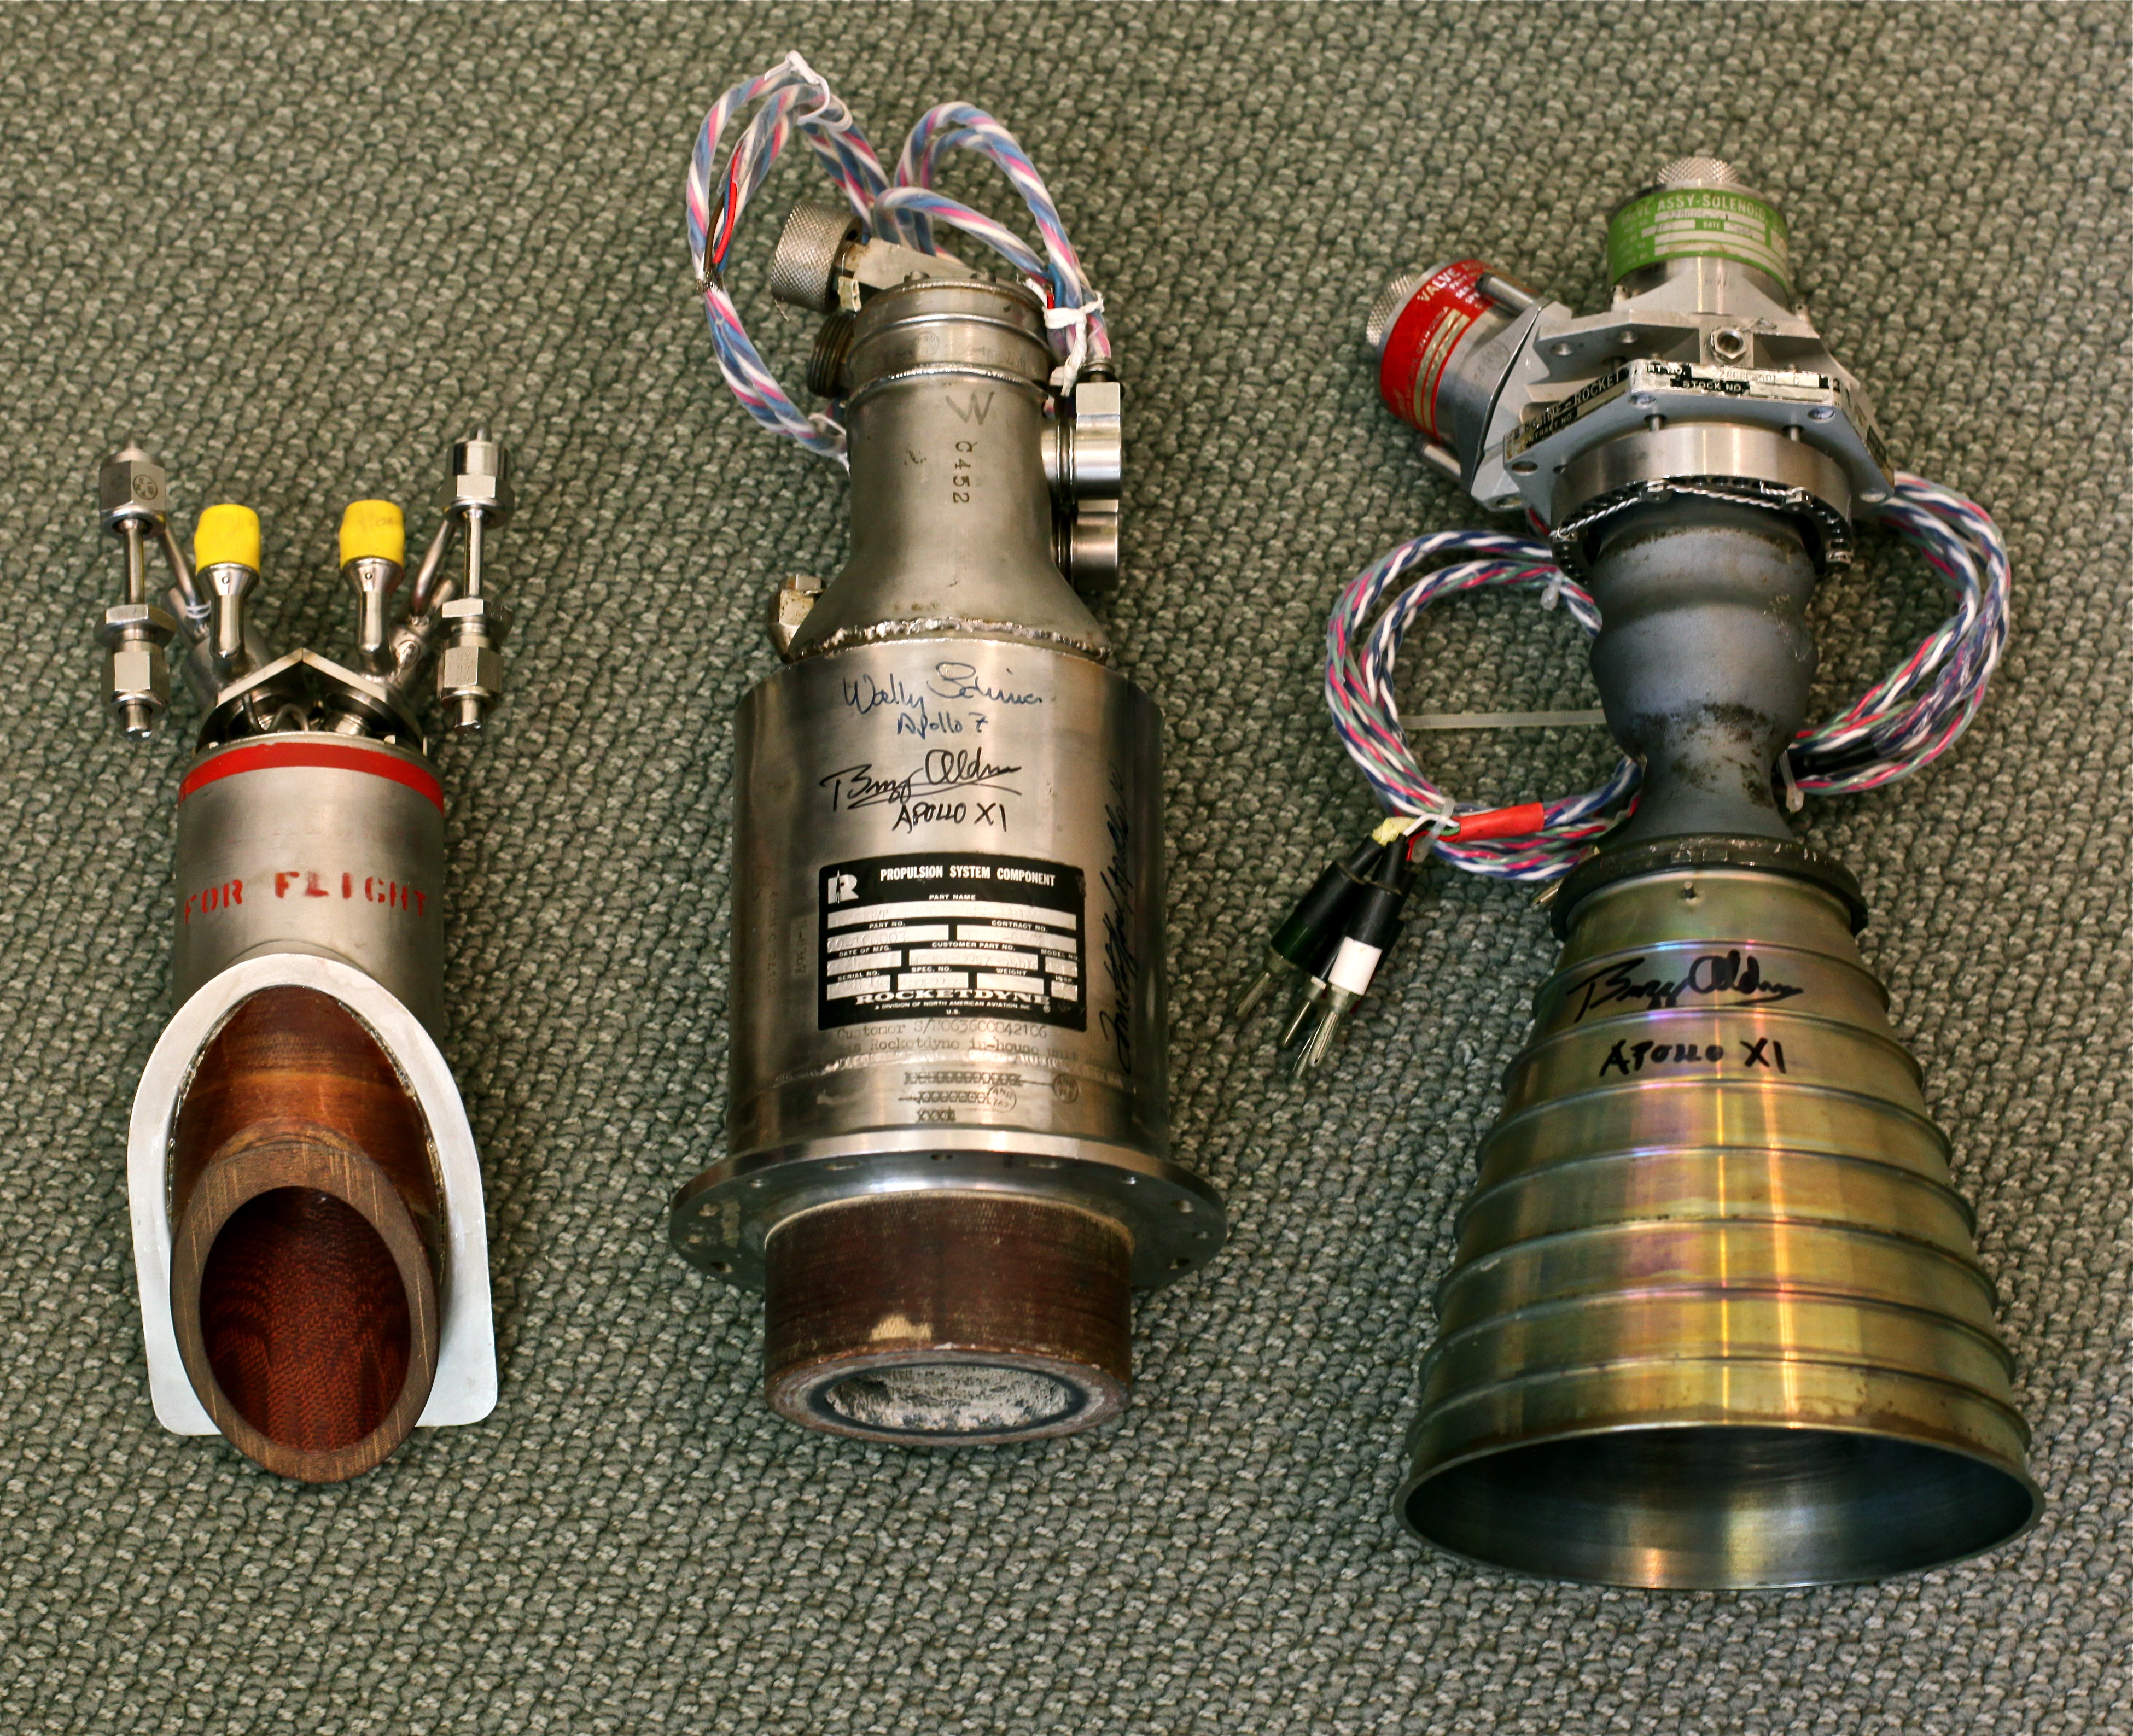 Gemini and Apollo rocket engines